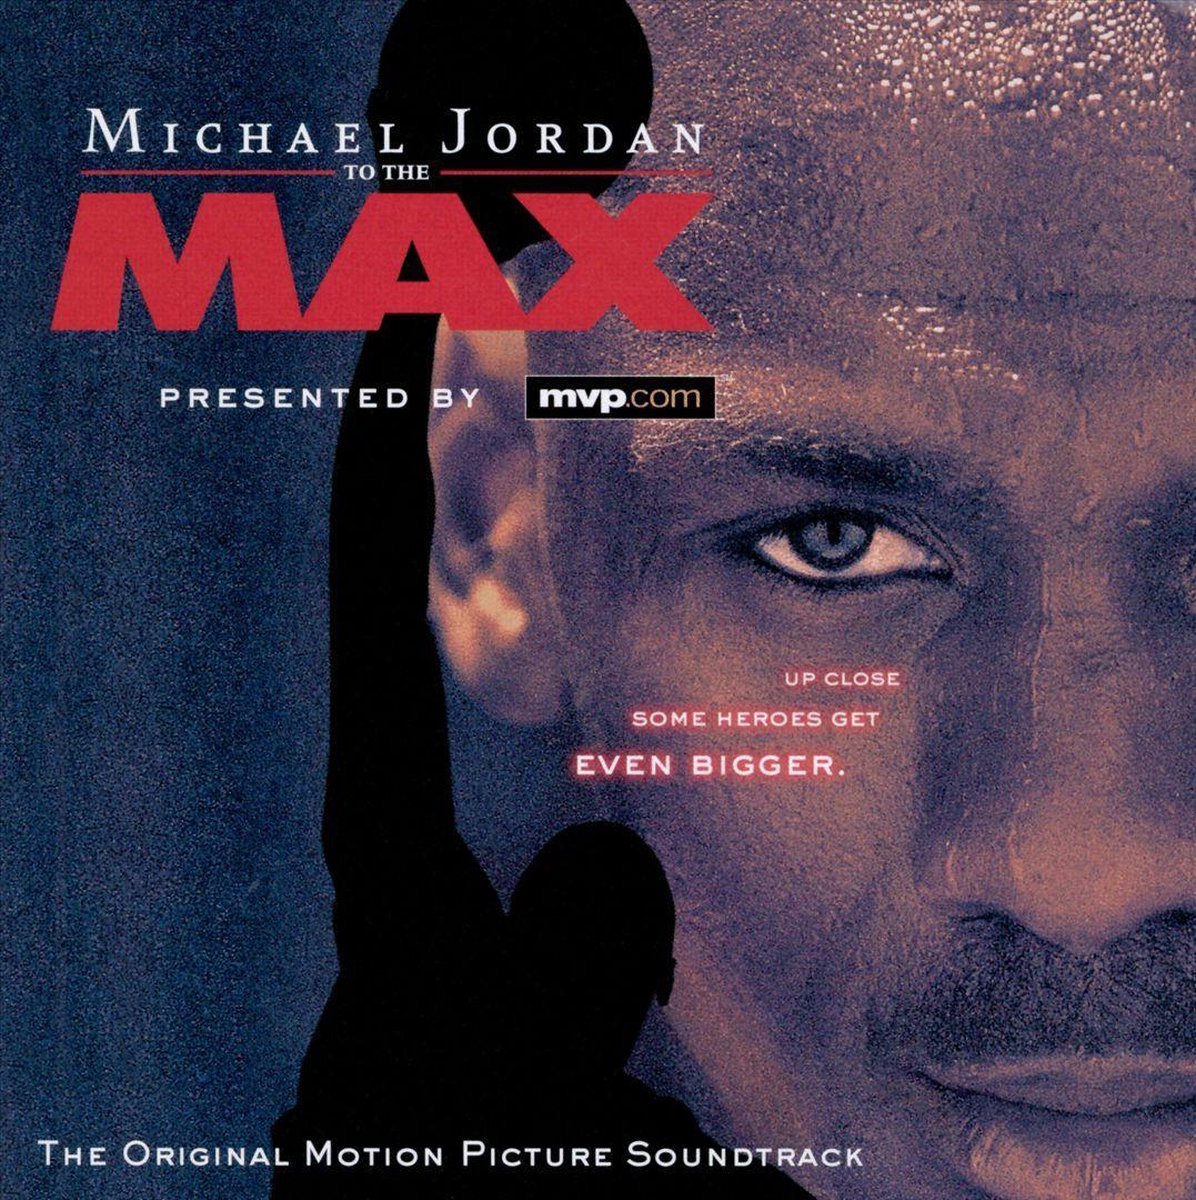 Michael Jordan to the Max - various artists